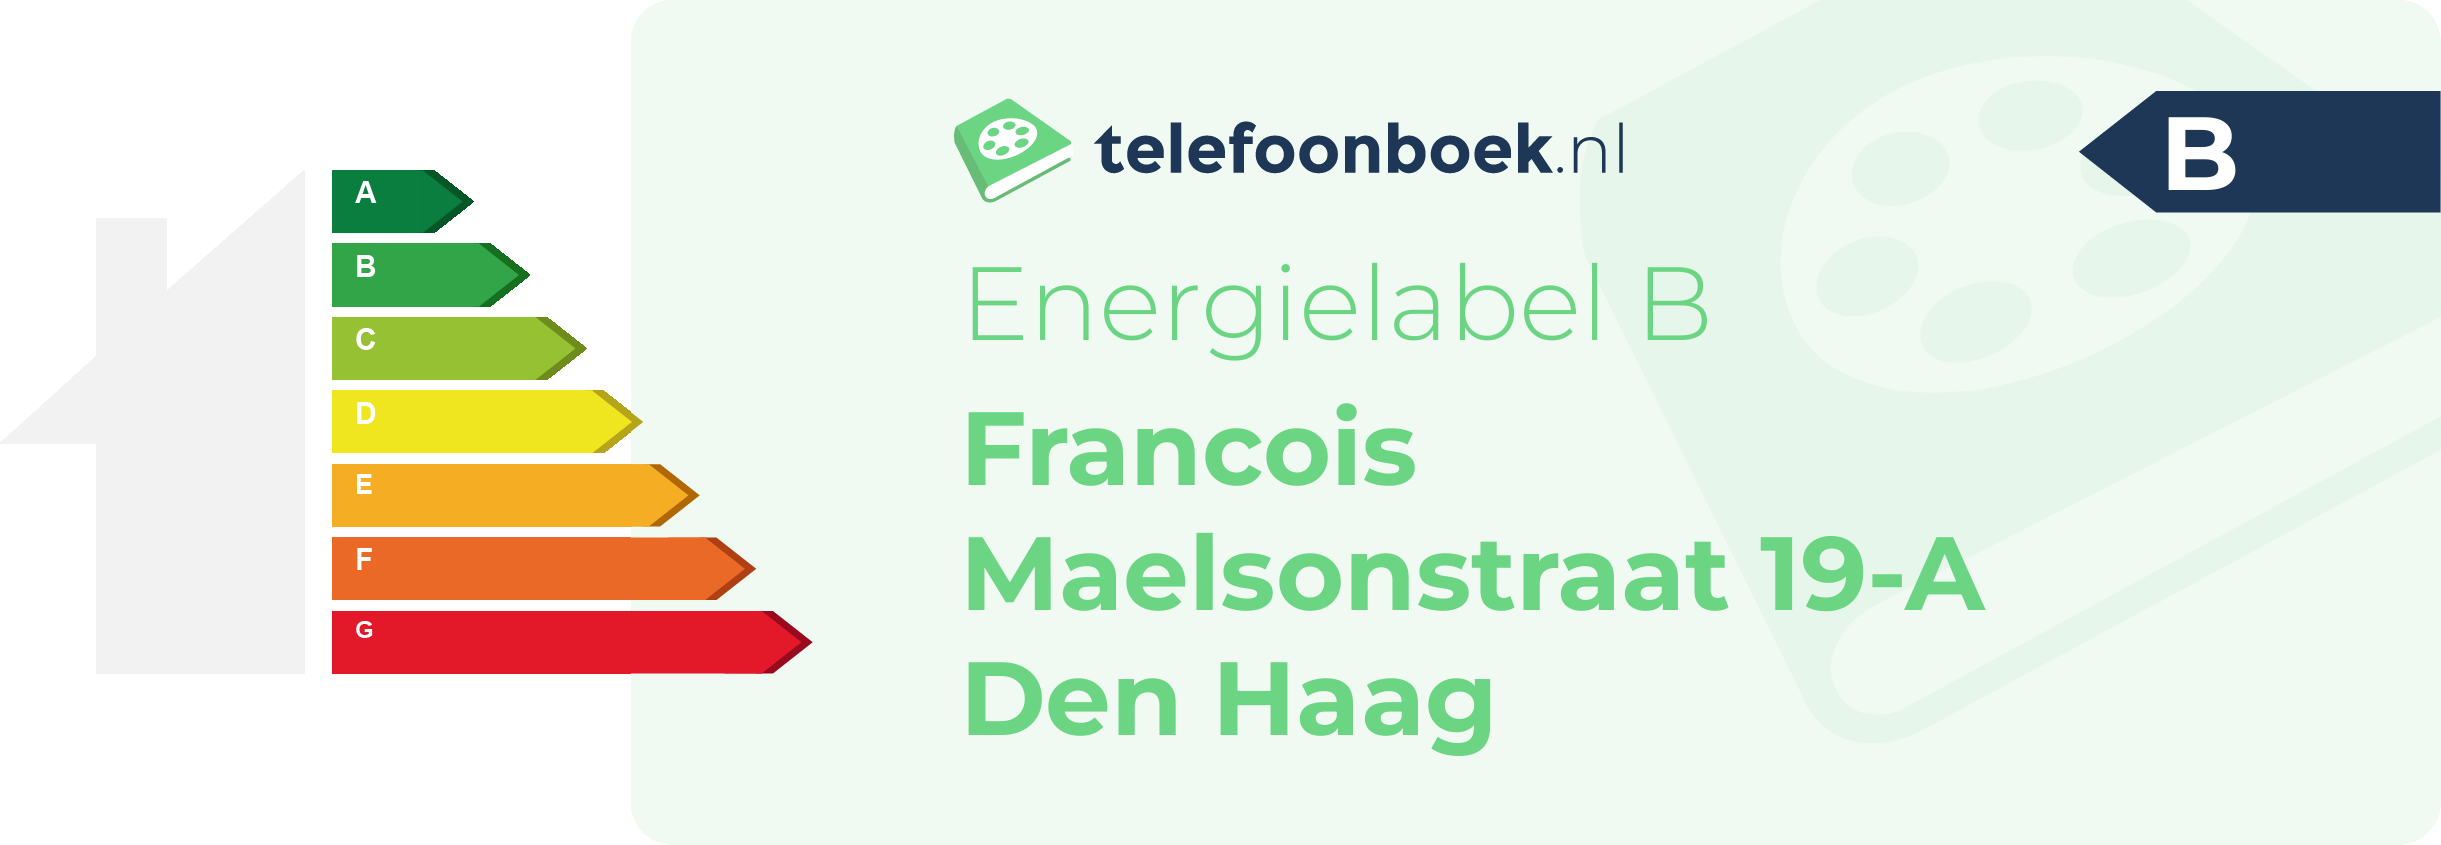 Energielabel Francois Maelsonstraat 19-A Den Haag